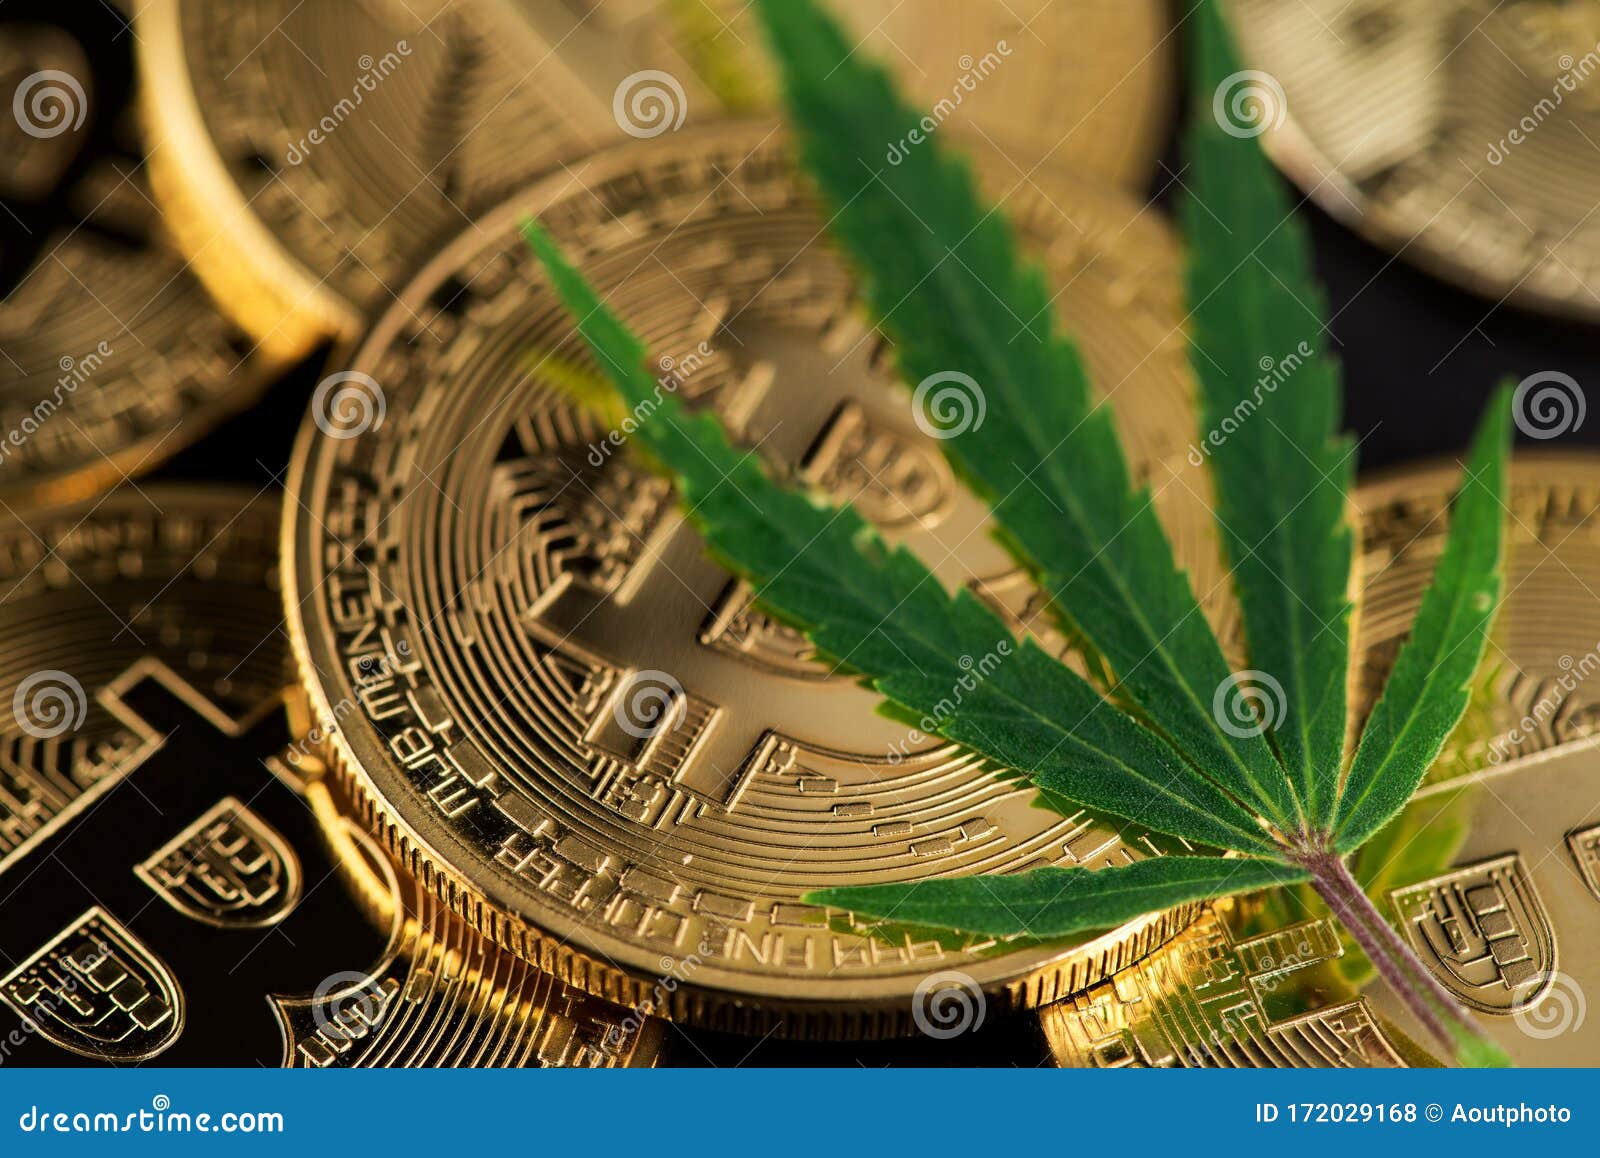 drugs crypto coin